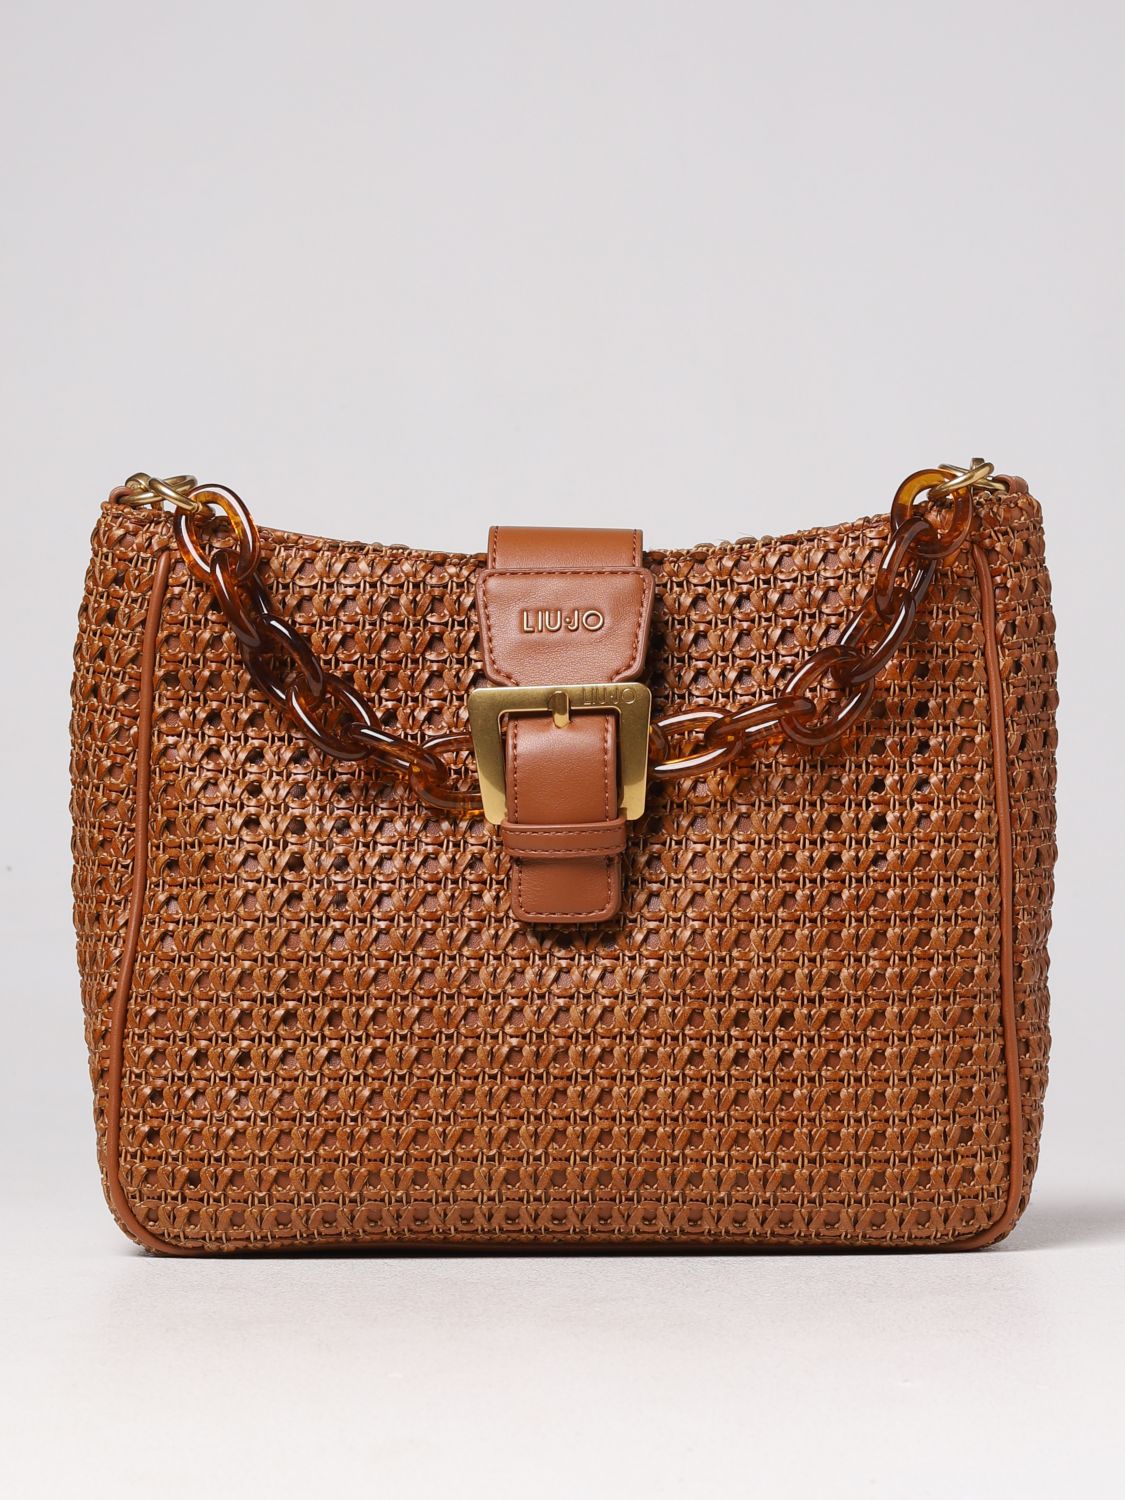 Minúsculo trapo Imposible LIU JO: handbag for woman - Brown | Liu Jo handbag AA3031E0513 online on  GIGLIO.COM